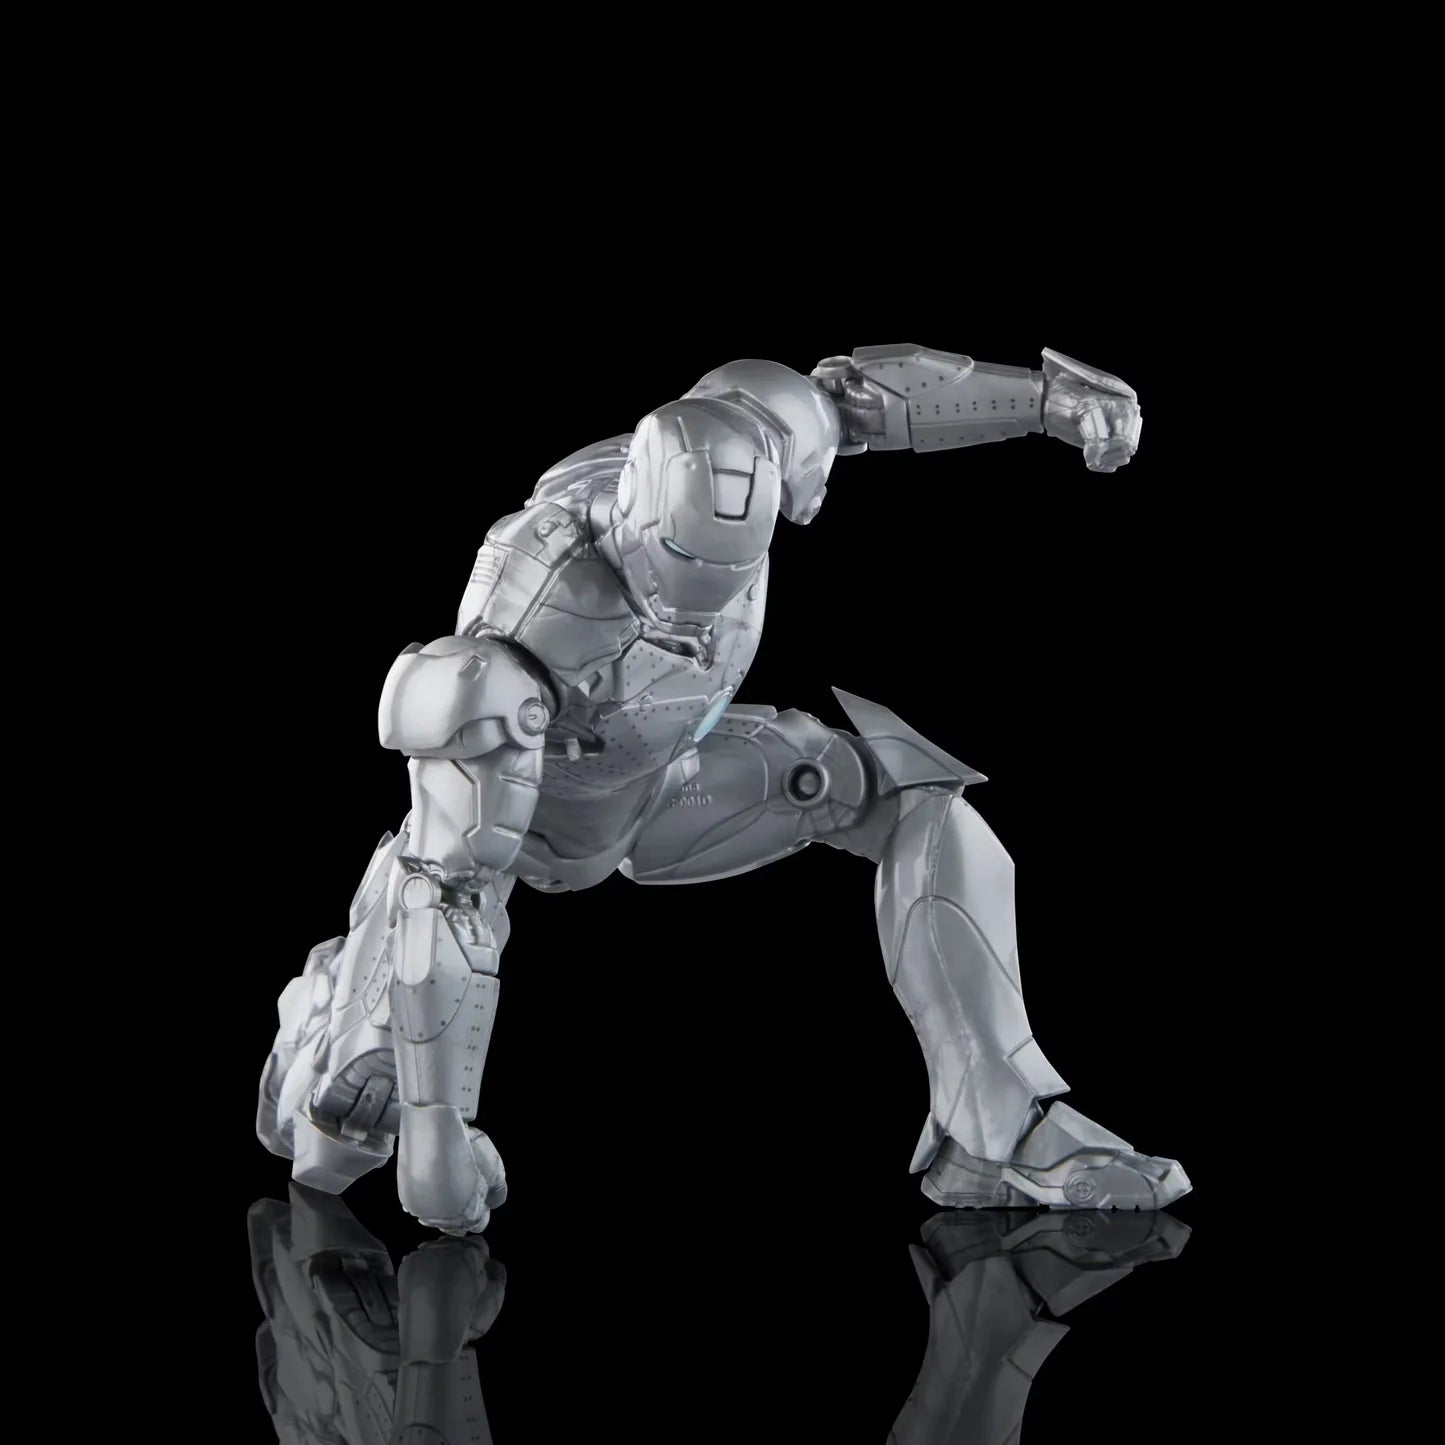 Marvel Studios: The Infinity Saga Iron Man Mark 2 DLX Action Figure By Threezero